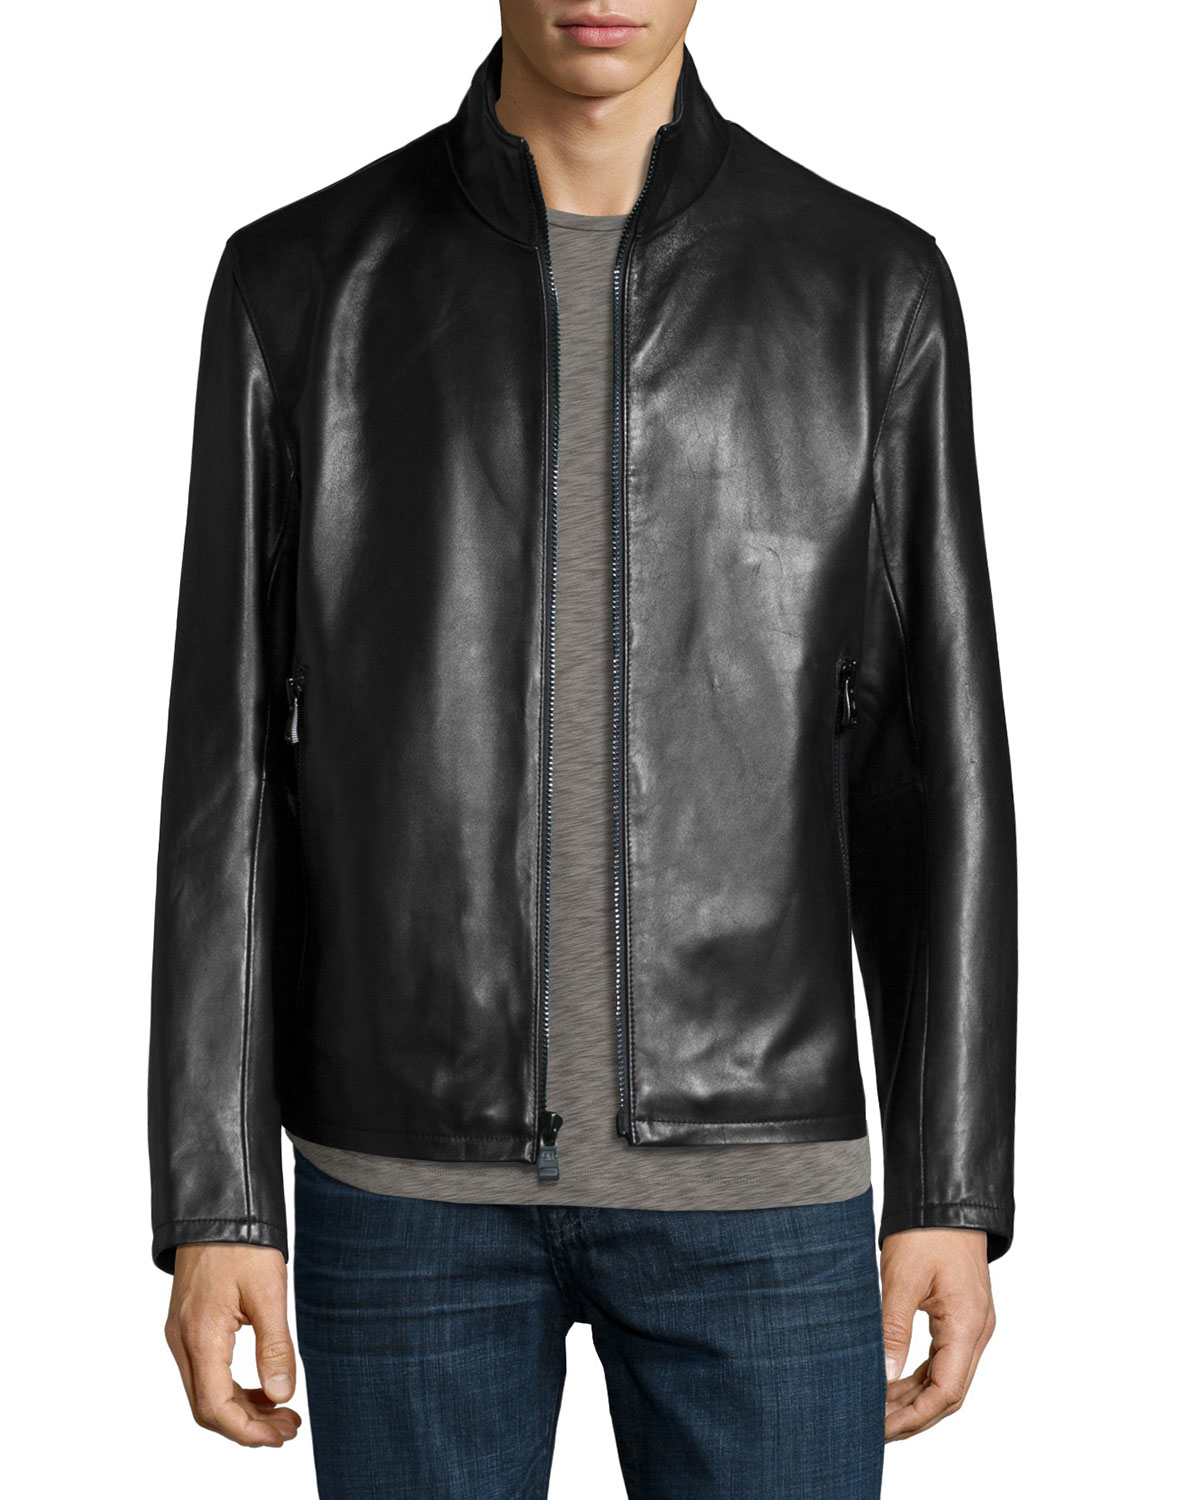 Andrew marc Dorset Leather Jacket in Black for Men | Lyst